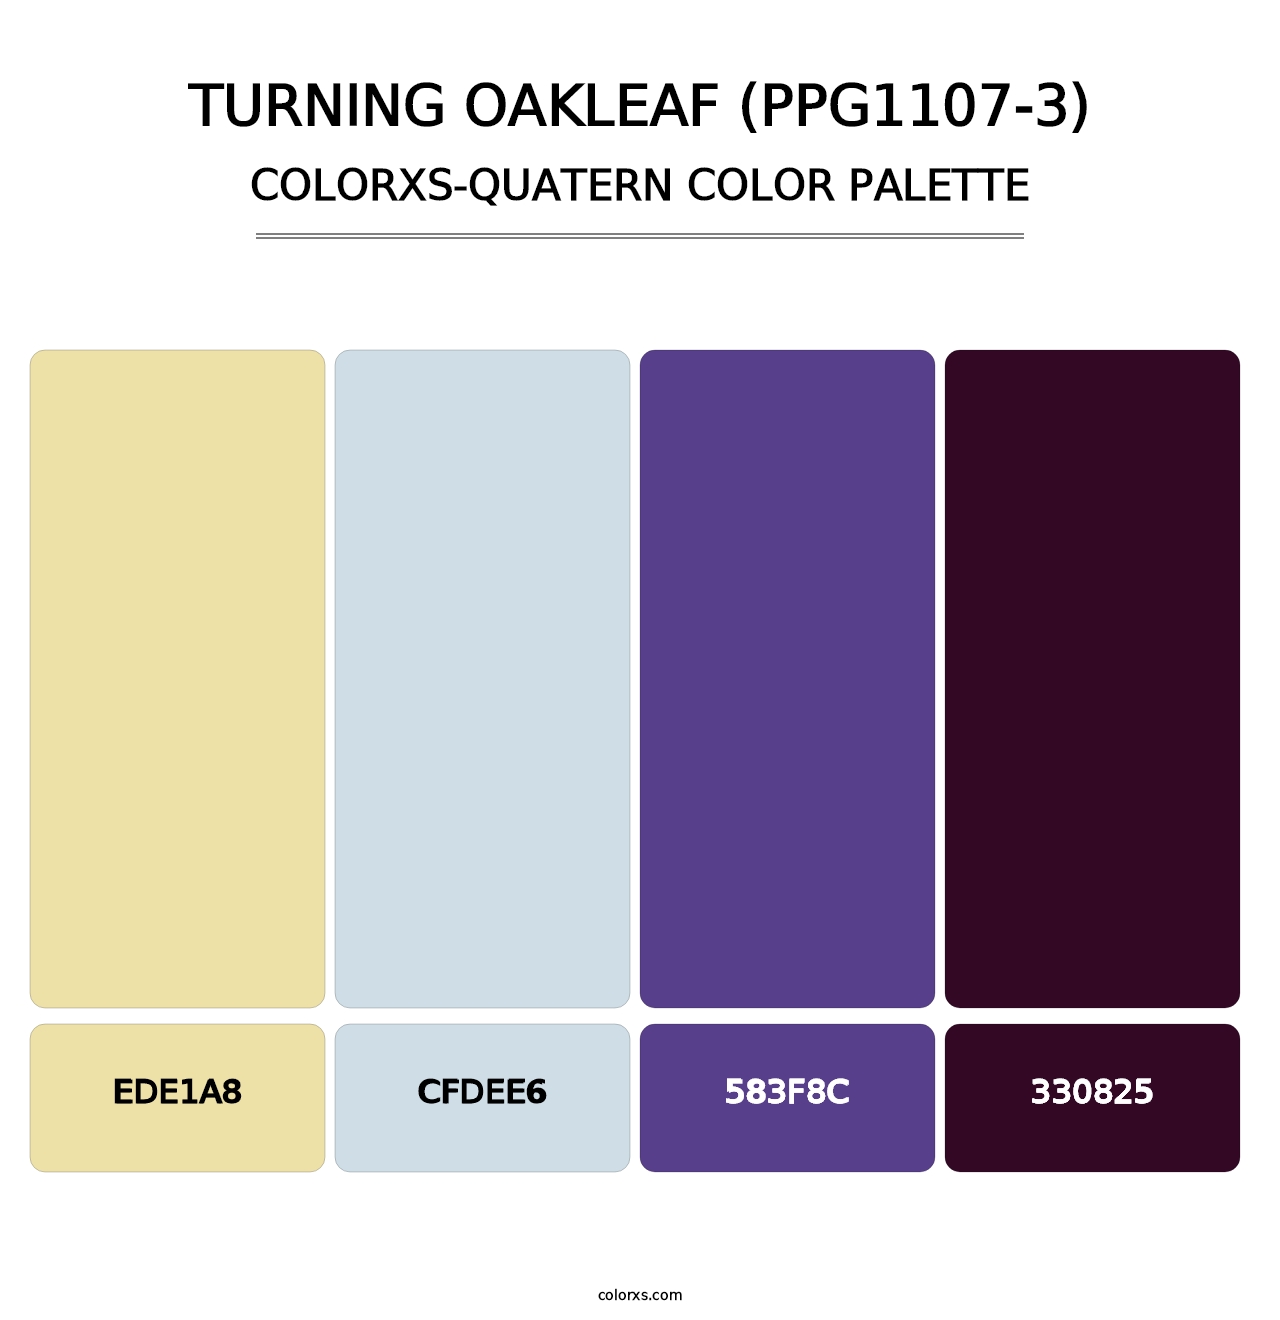 Turning Oakleaf (PPG1107-3) - Colorxs Quatern Palette